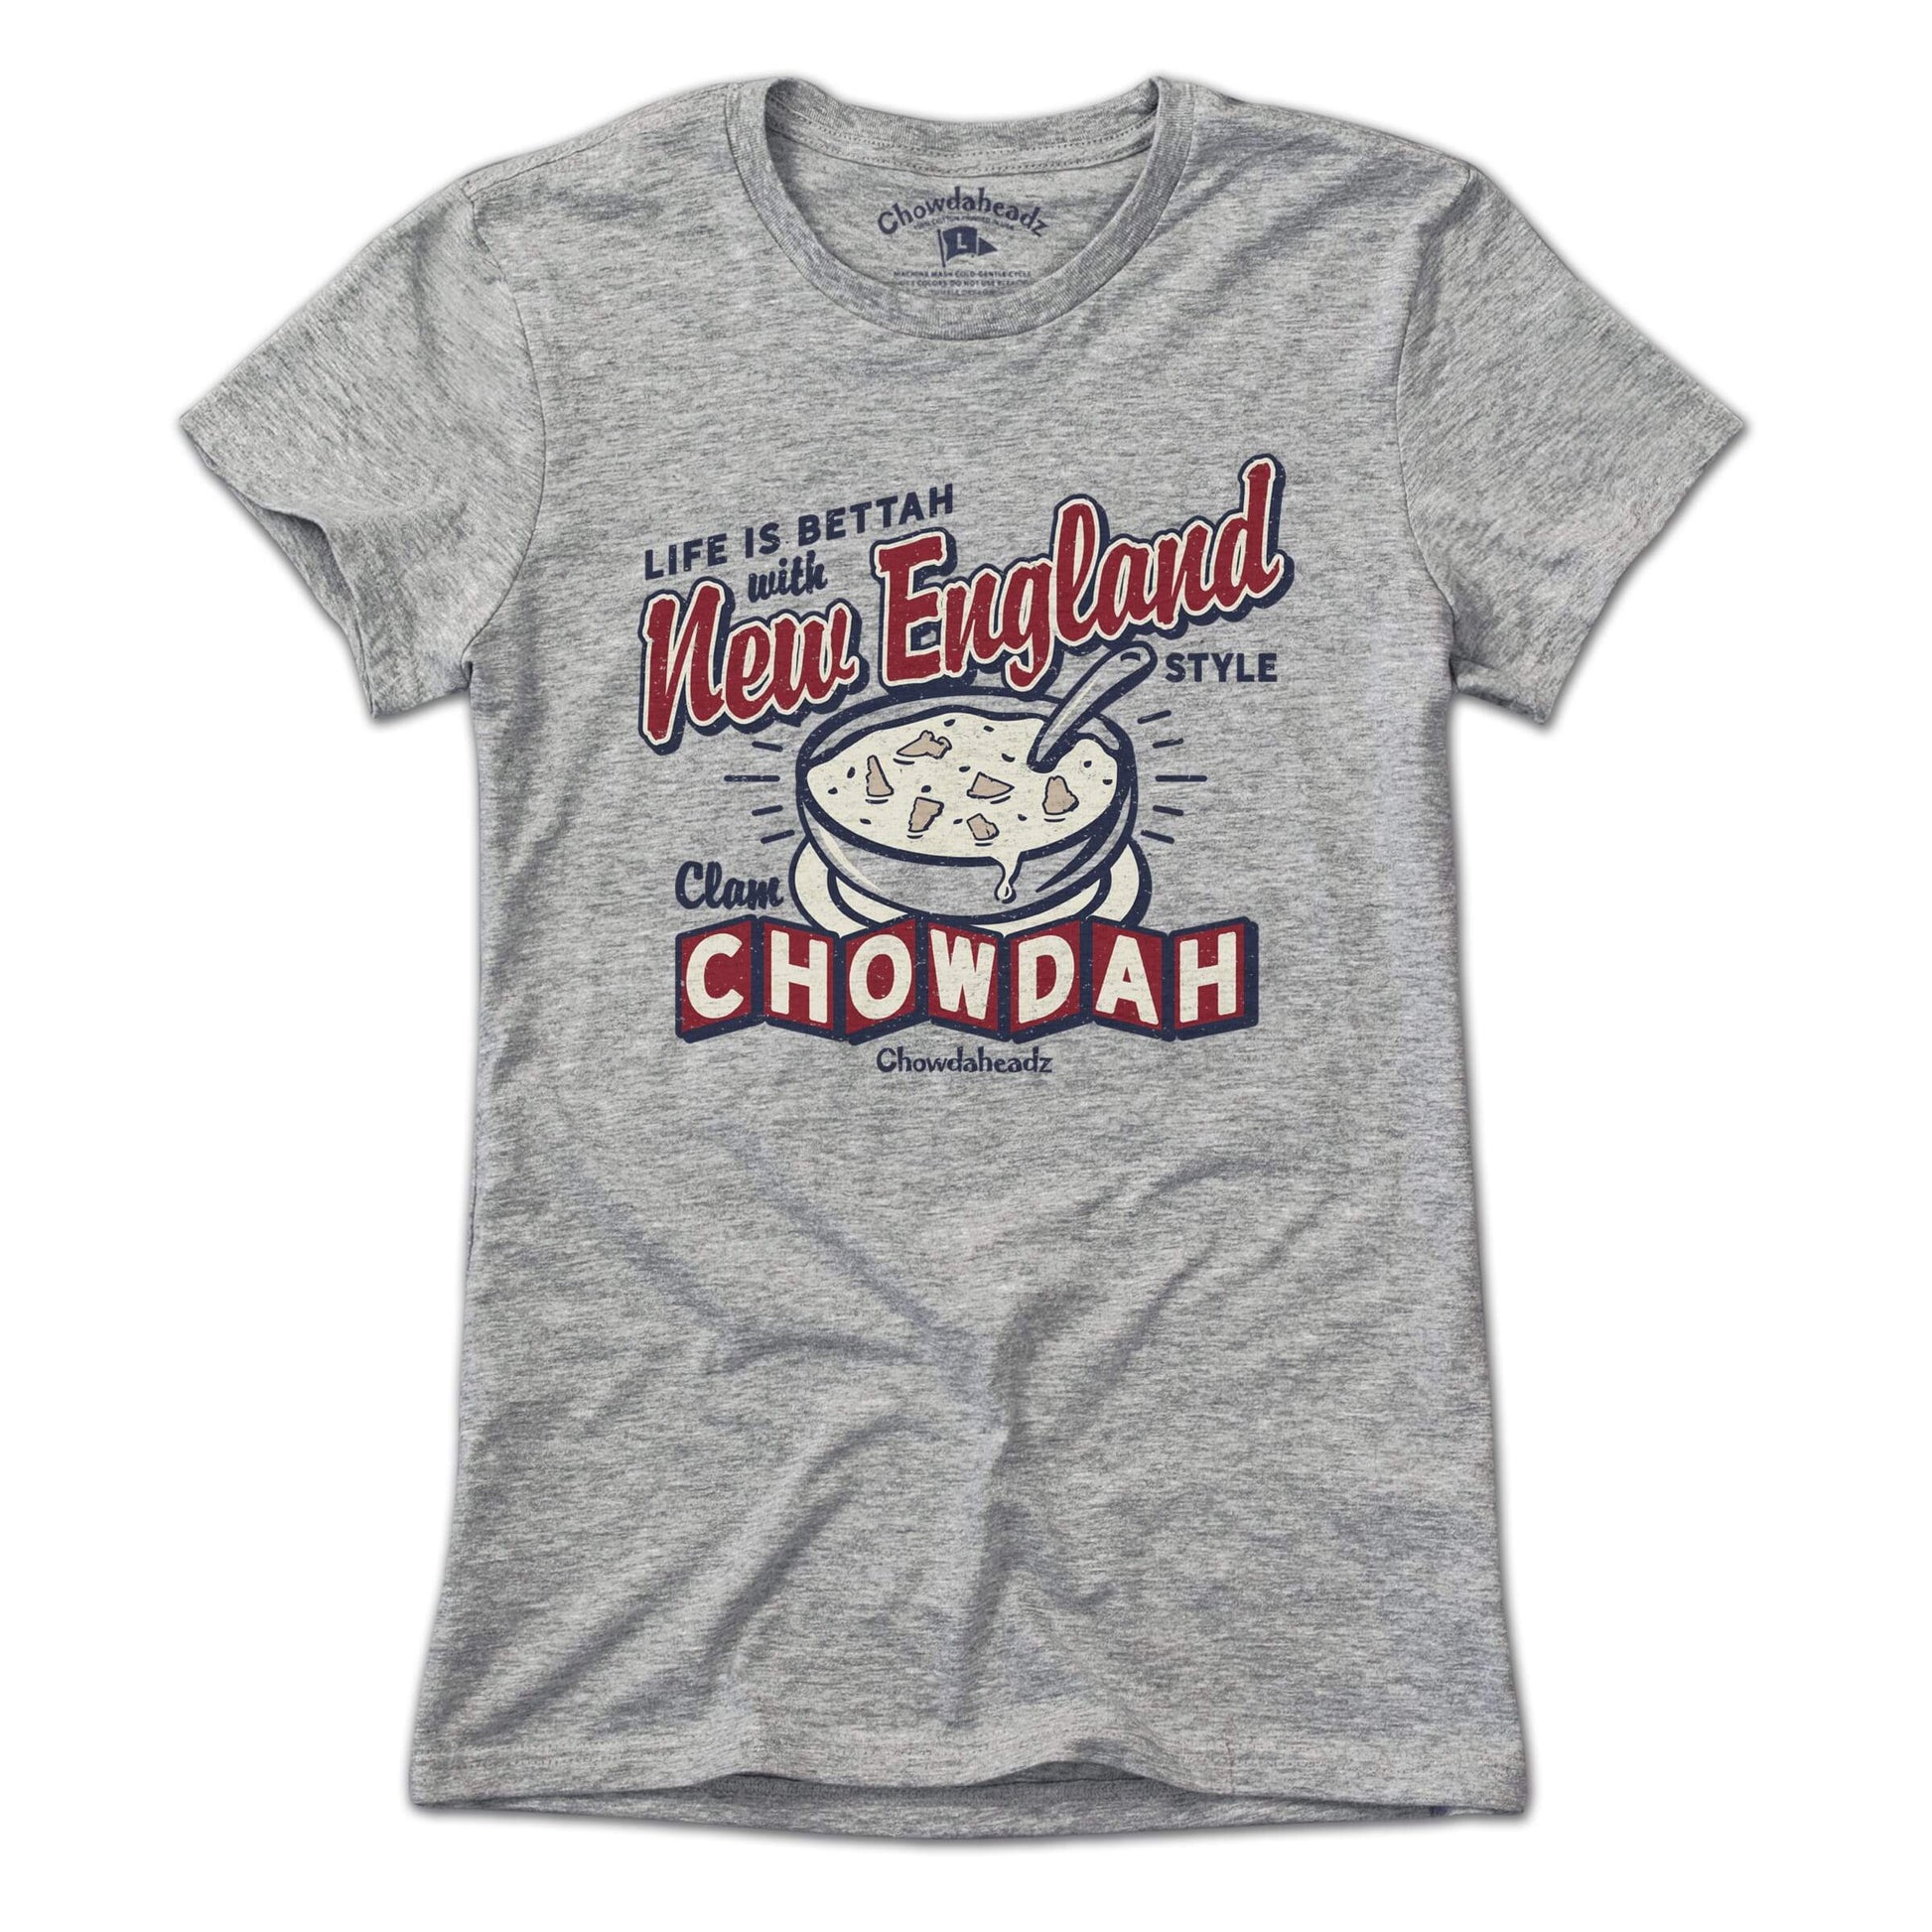 New England Clam Chowdah T-Shirt - Chowdaheadz